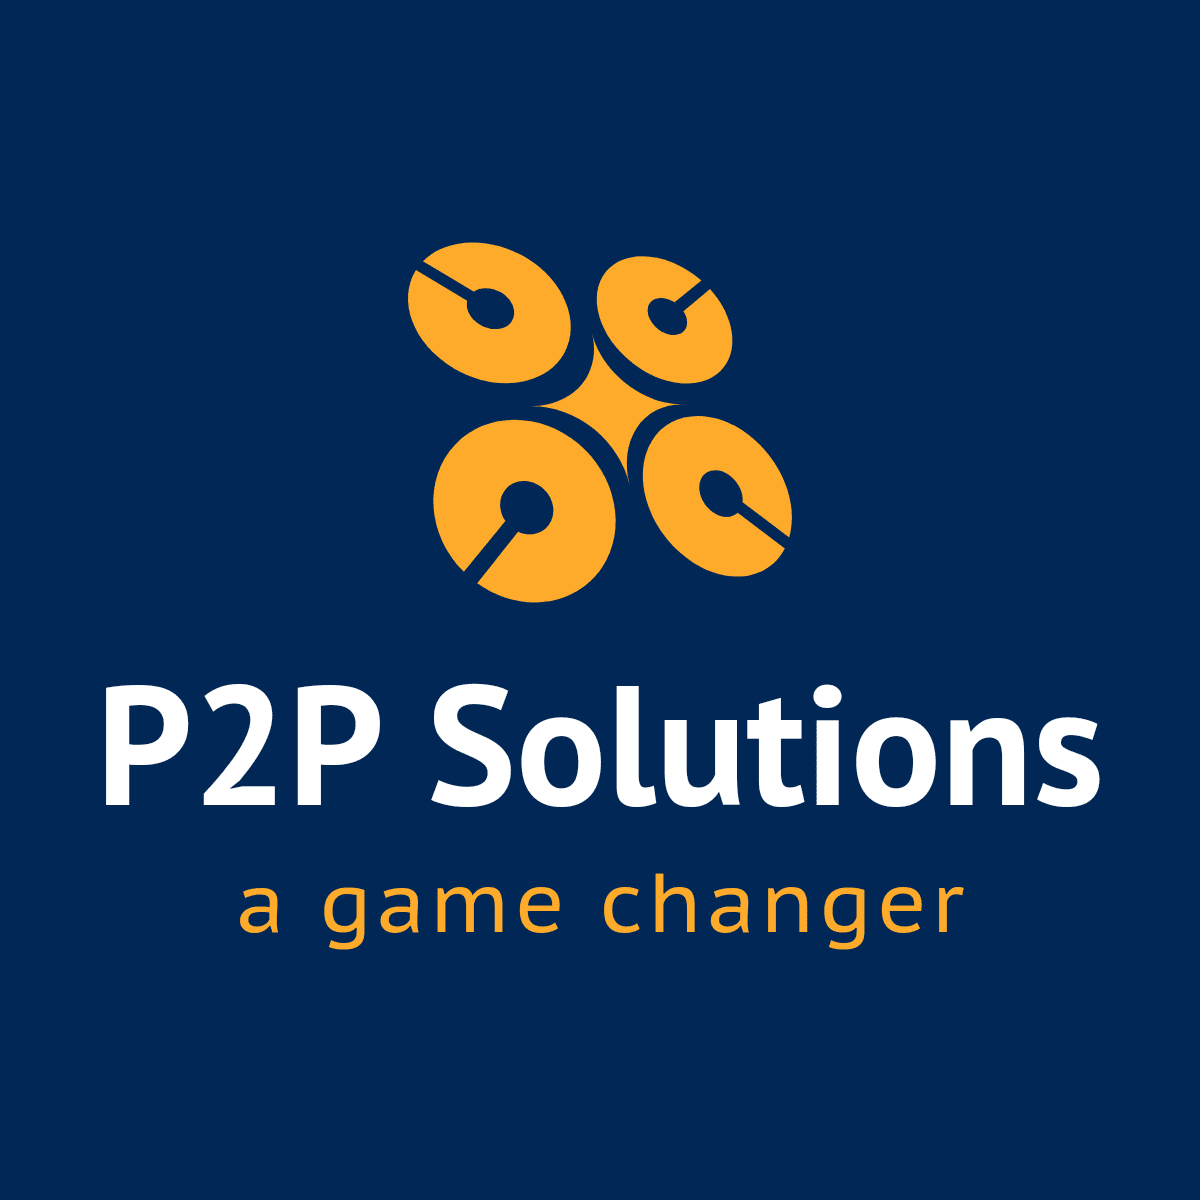 P2P Solutions